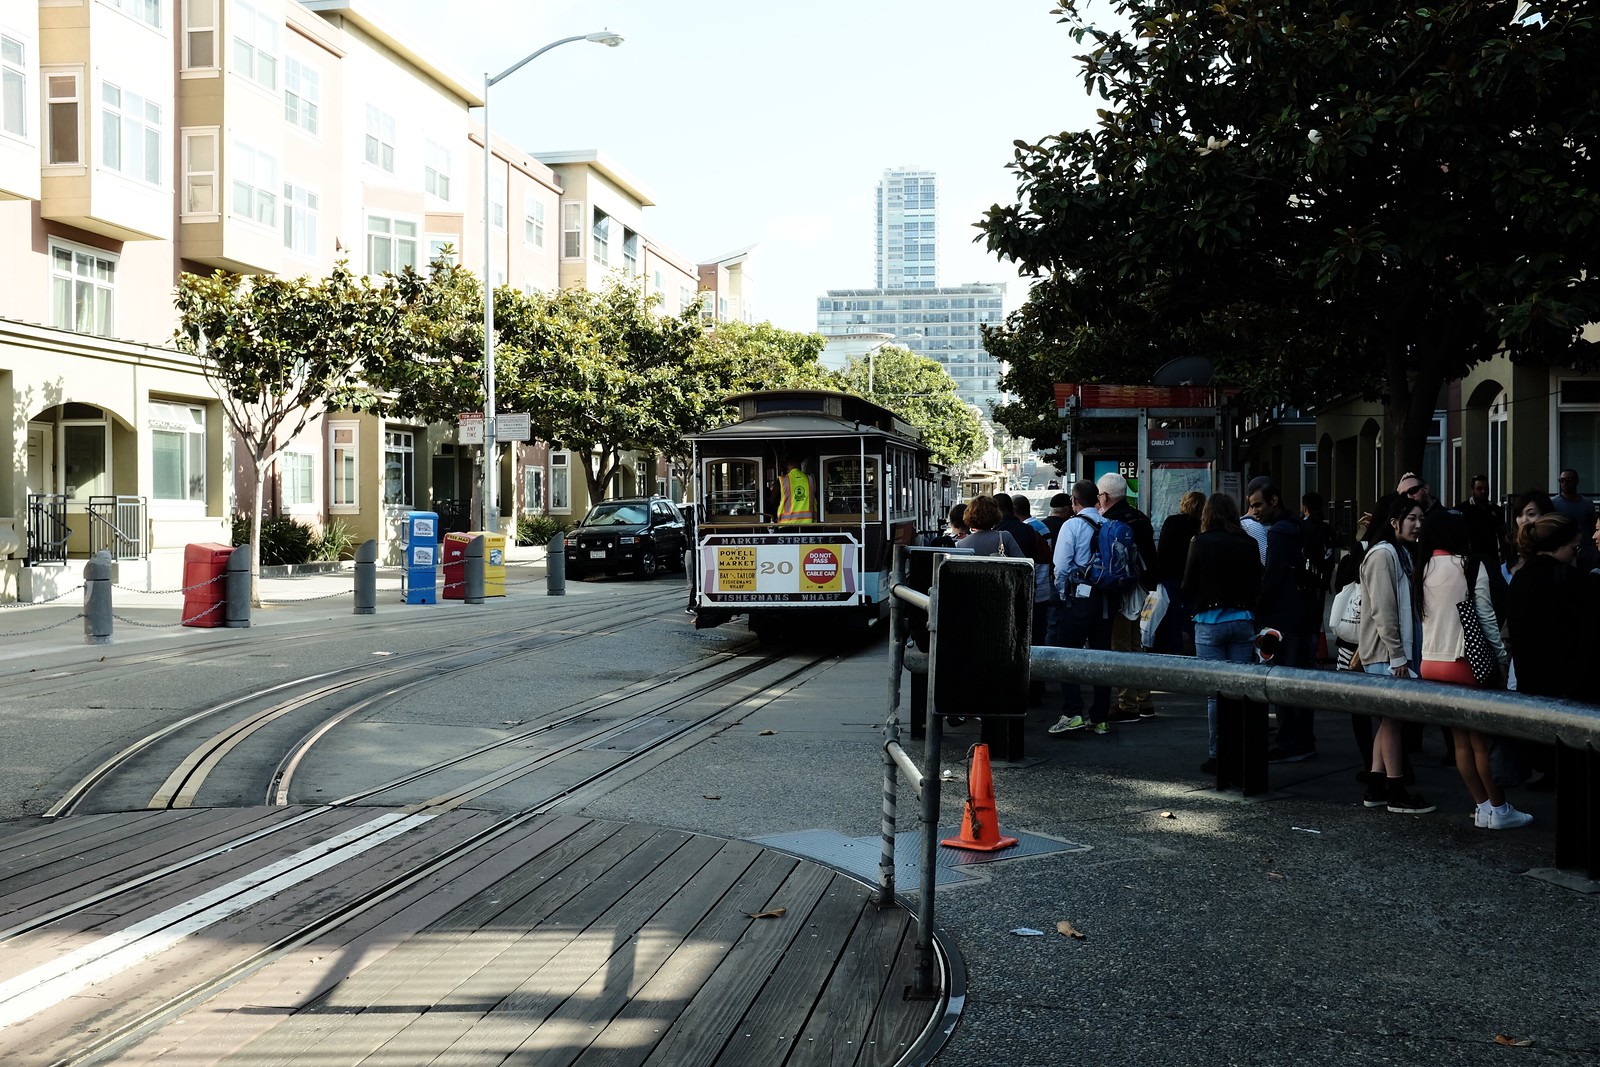 The San Francisco by FUJIFILM X100S.